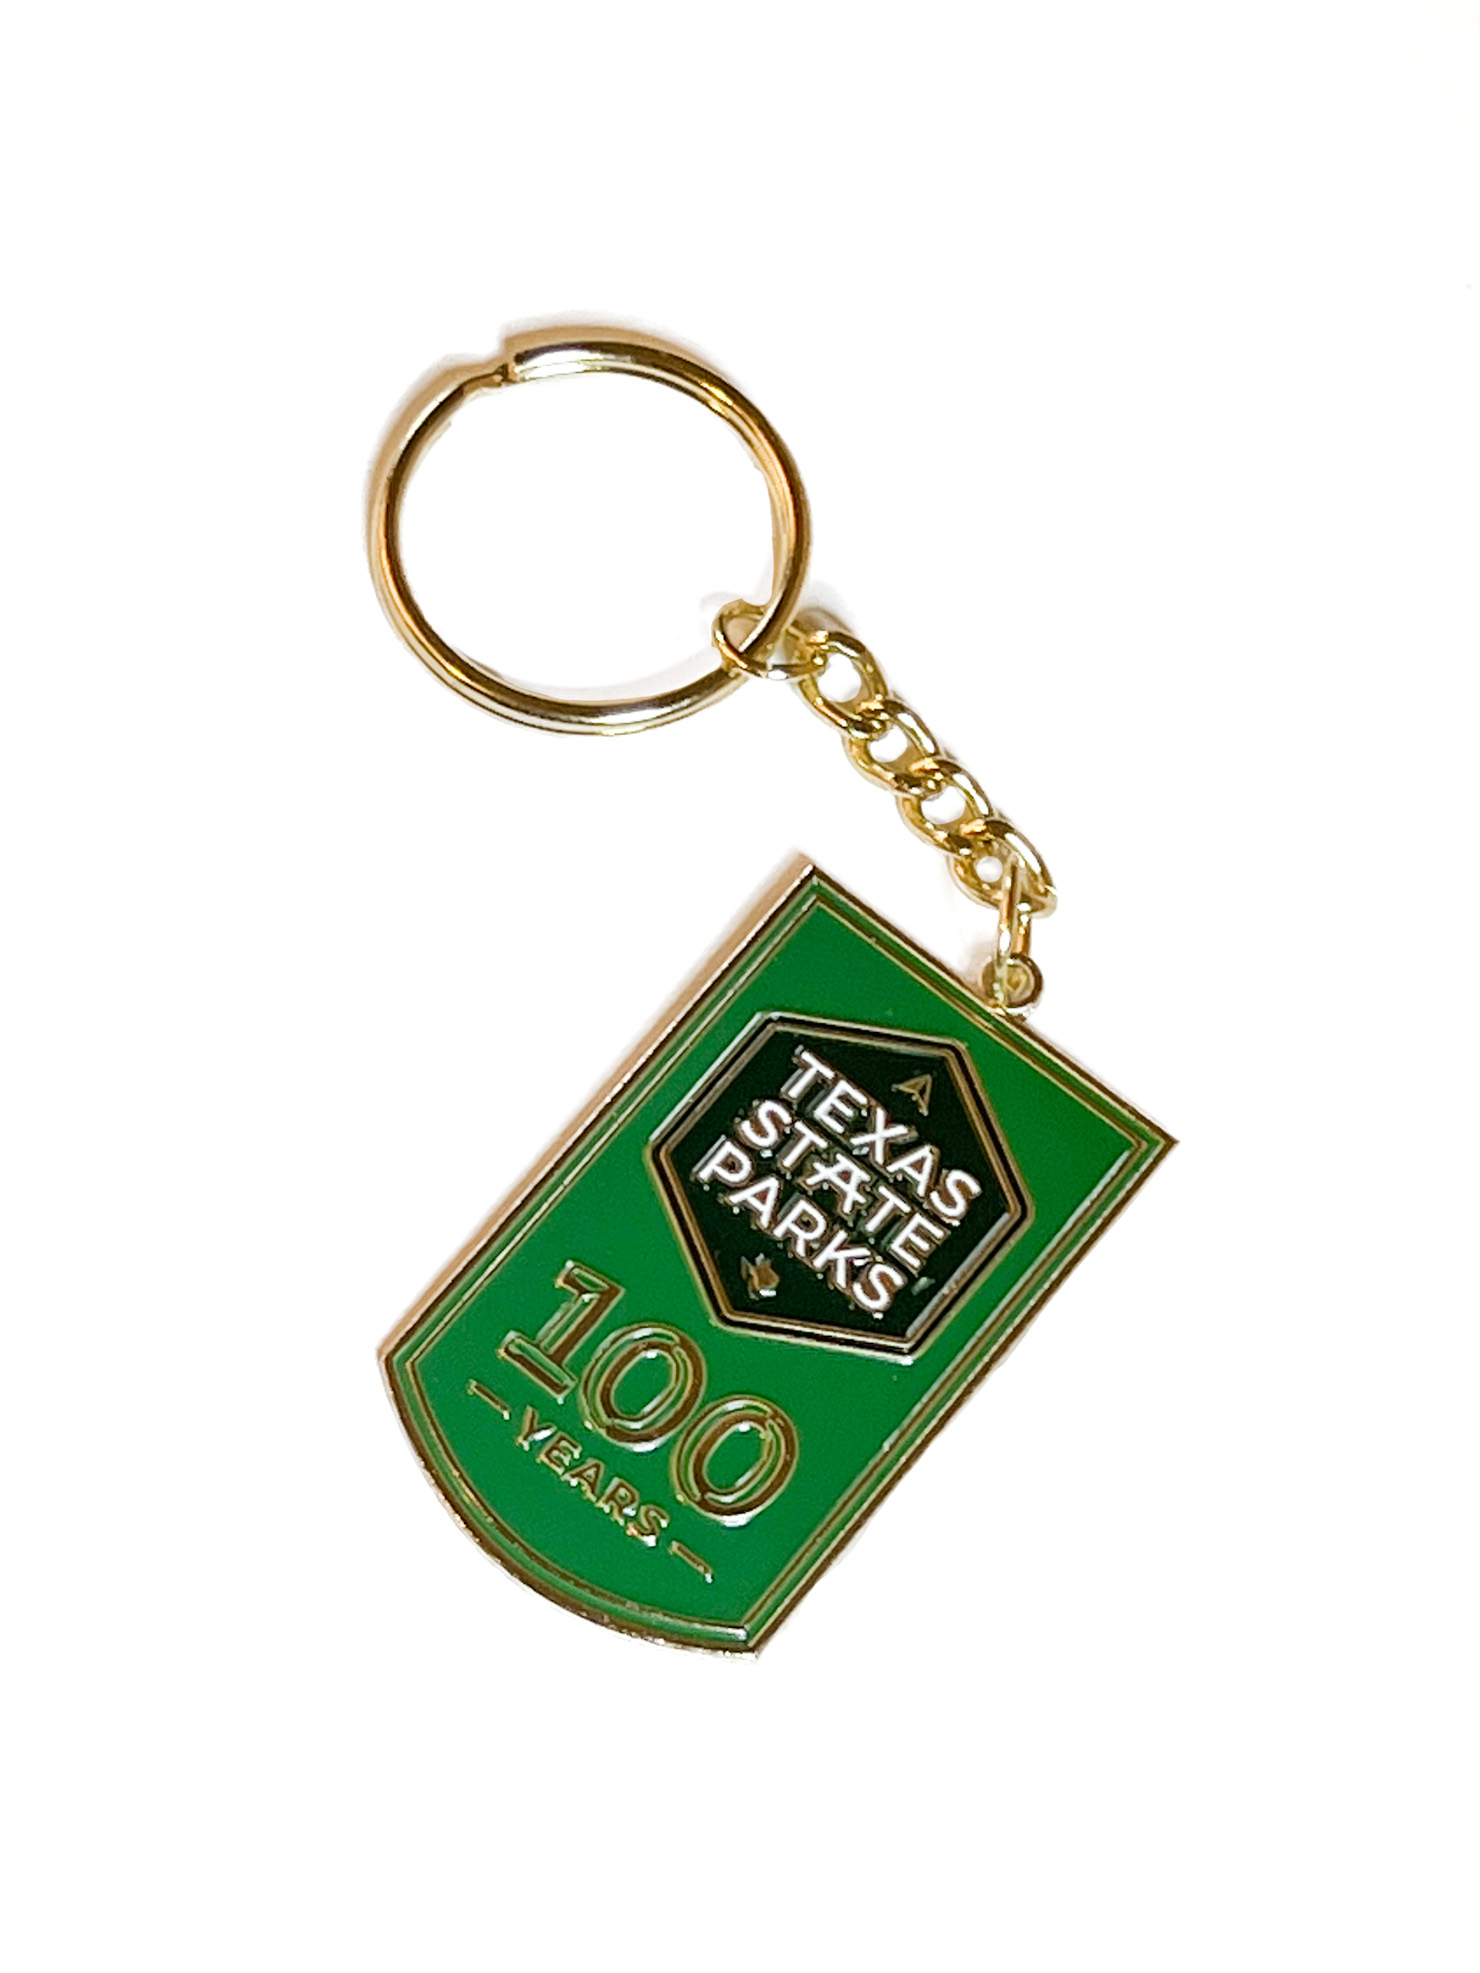 100 Year Key Chain-SP100Merchandise_Keychain_IMG_6060